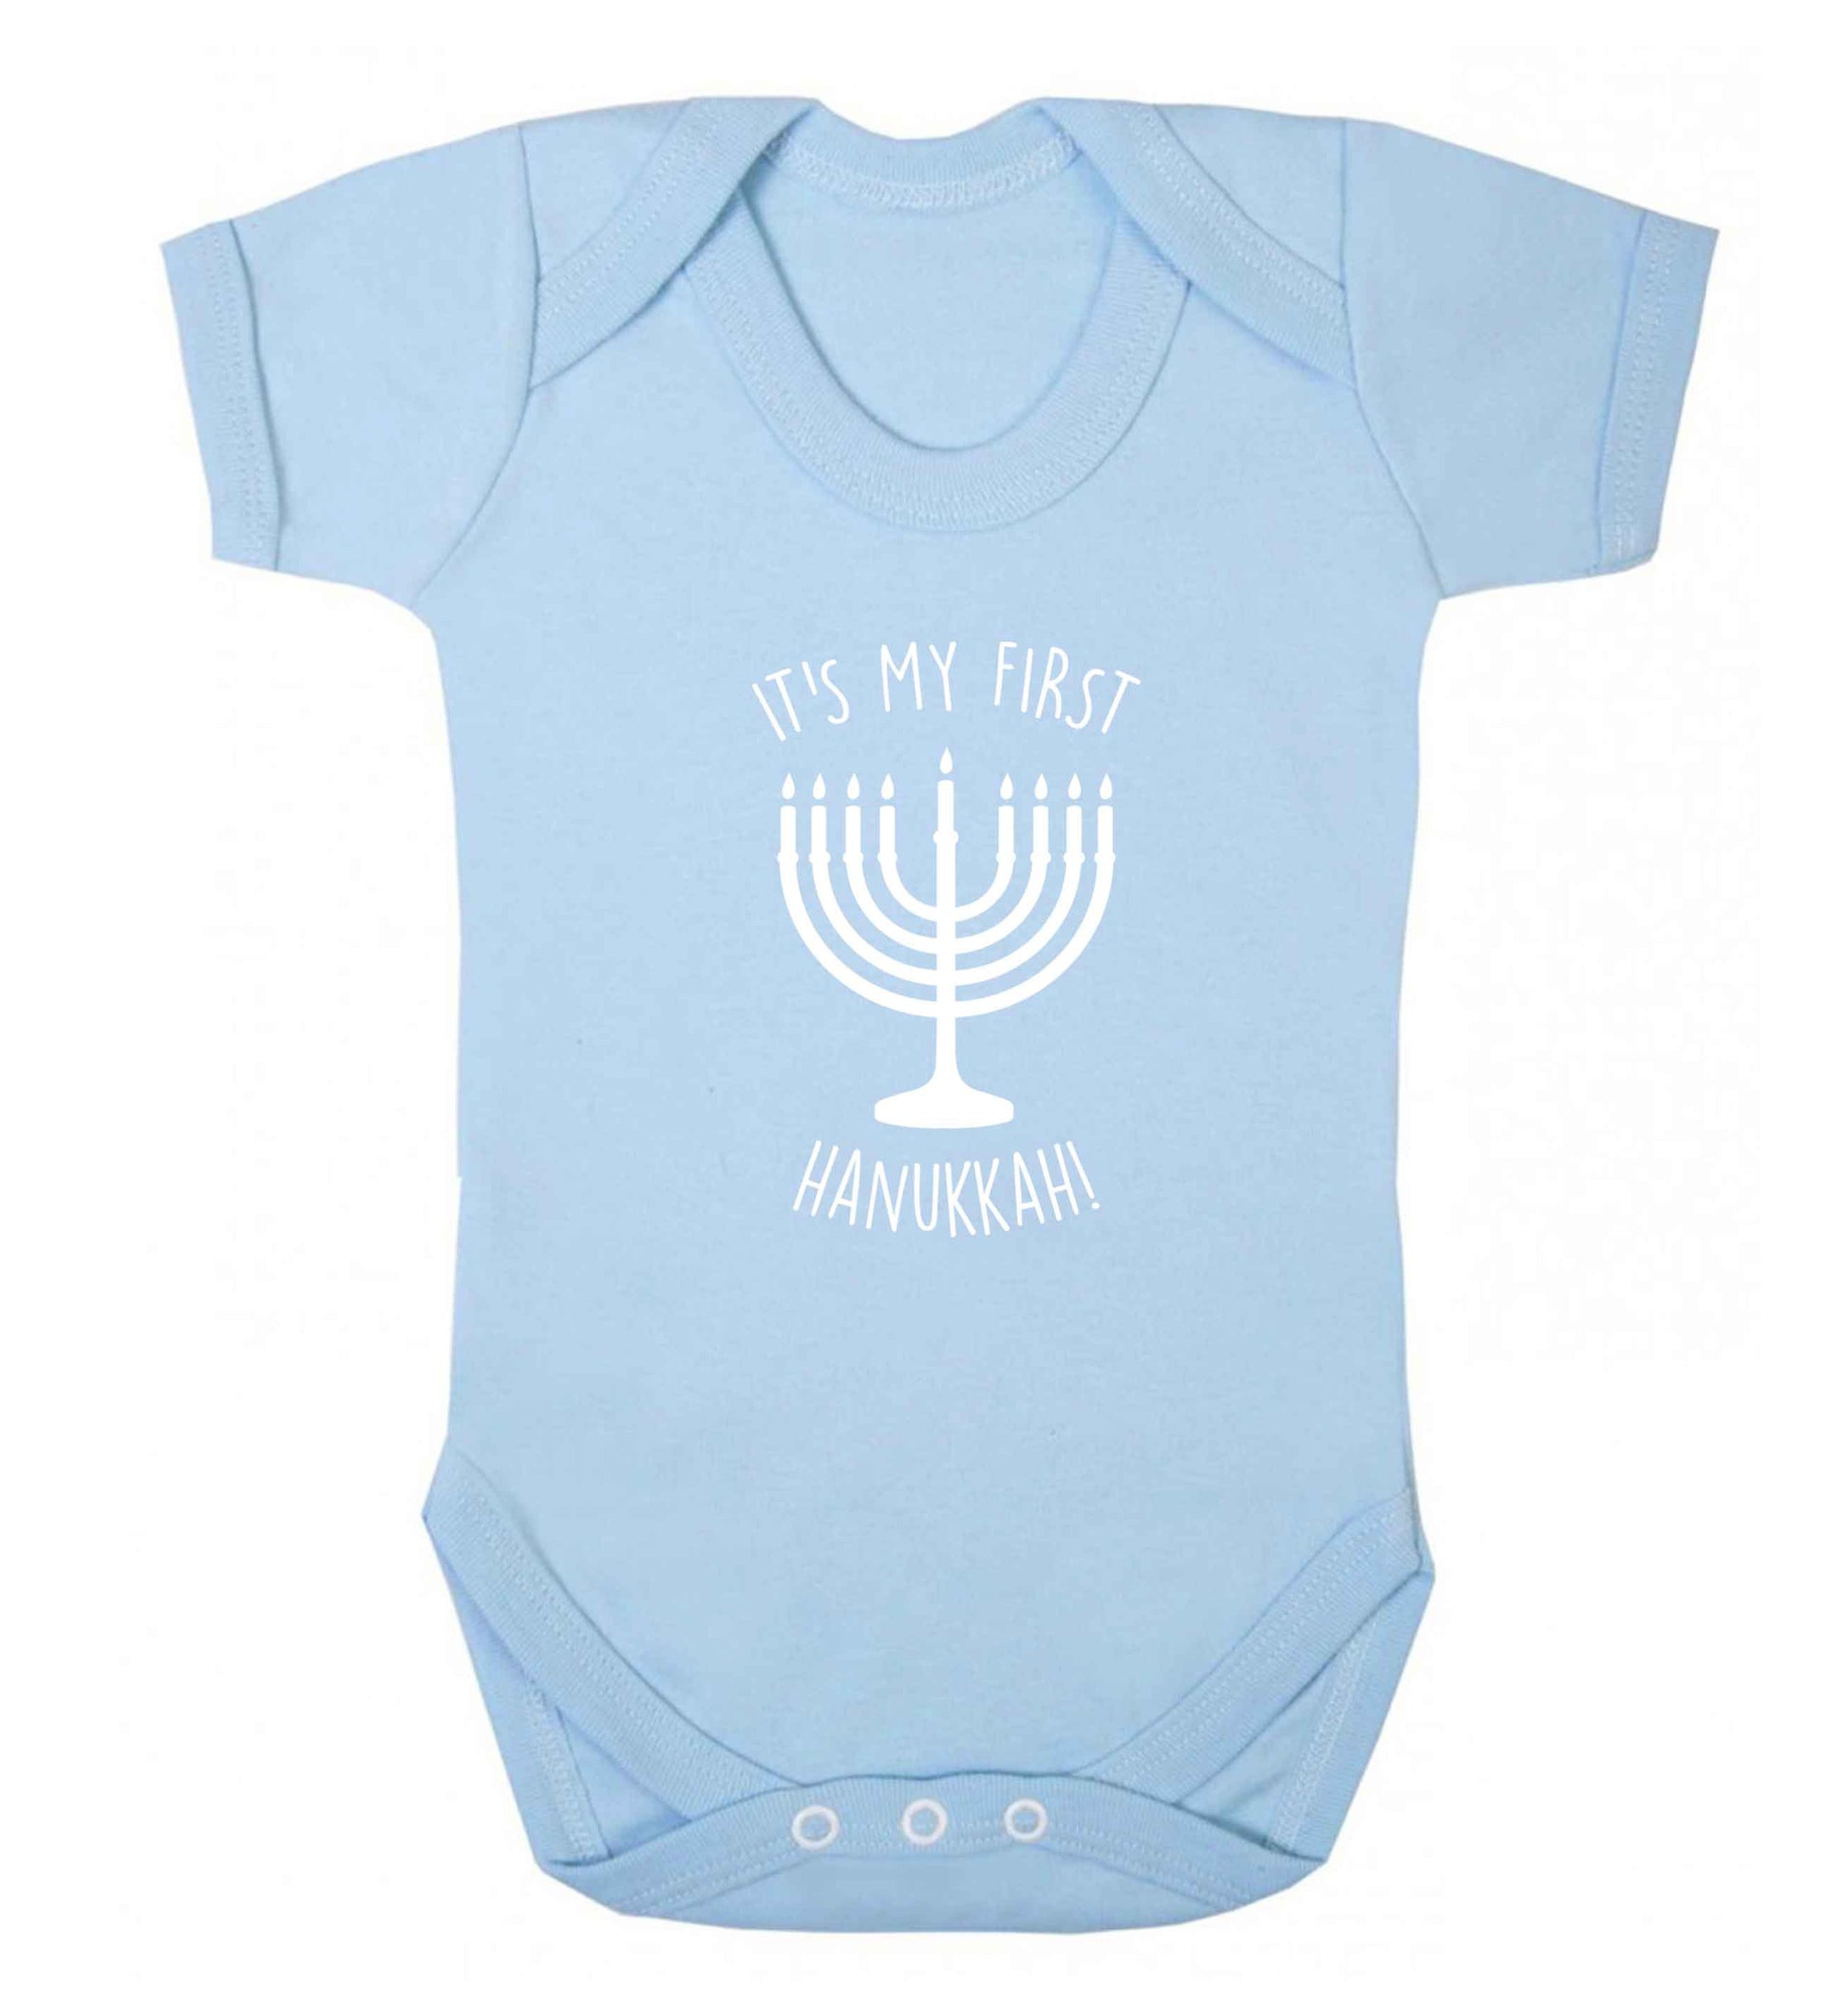 It's my first hanukkah baby vest pale blue 18-24 months